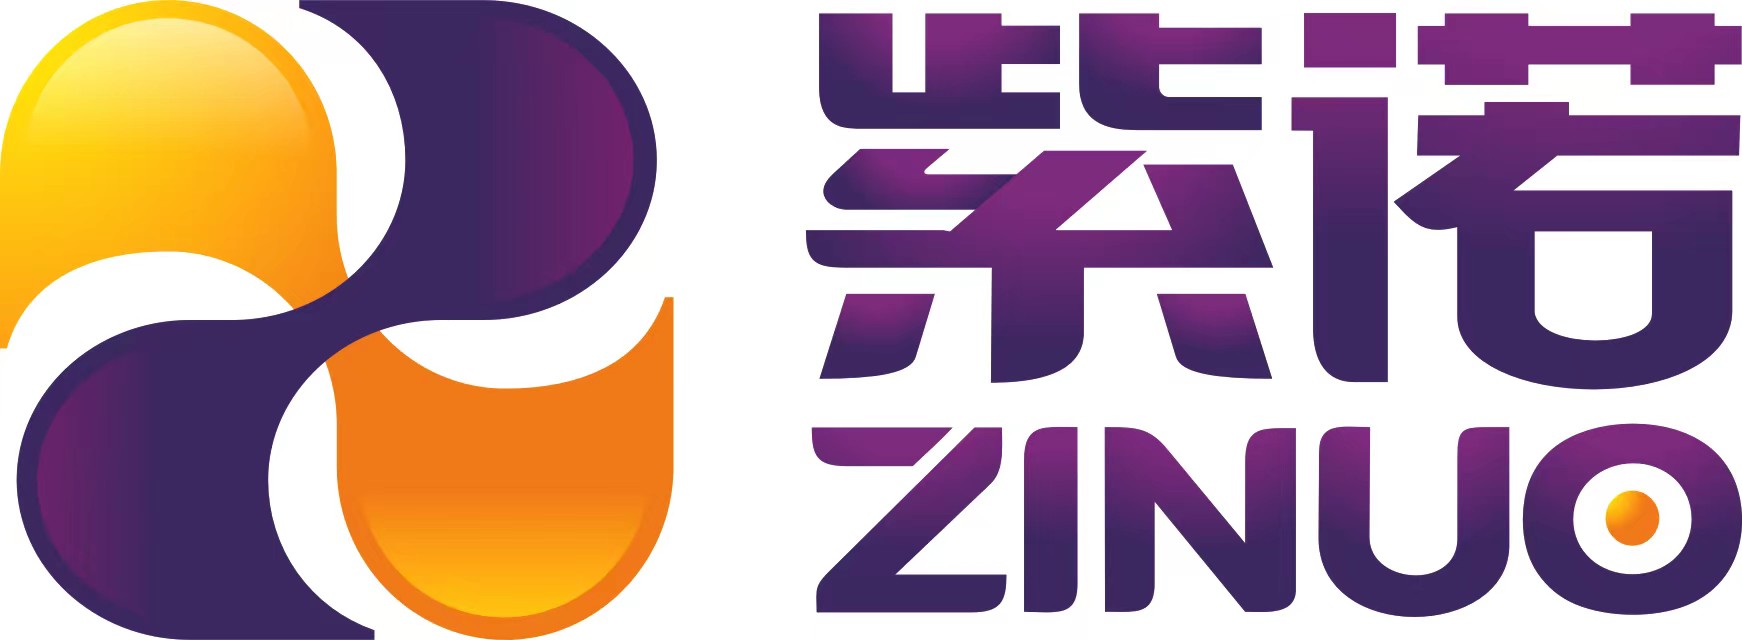 Hubei Zinuo New Material Technology Co., Ltd.